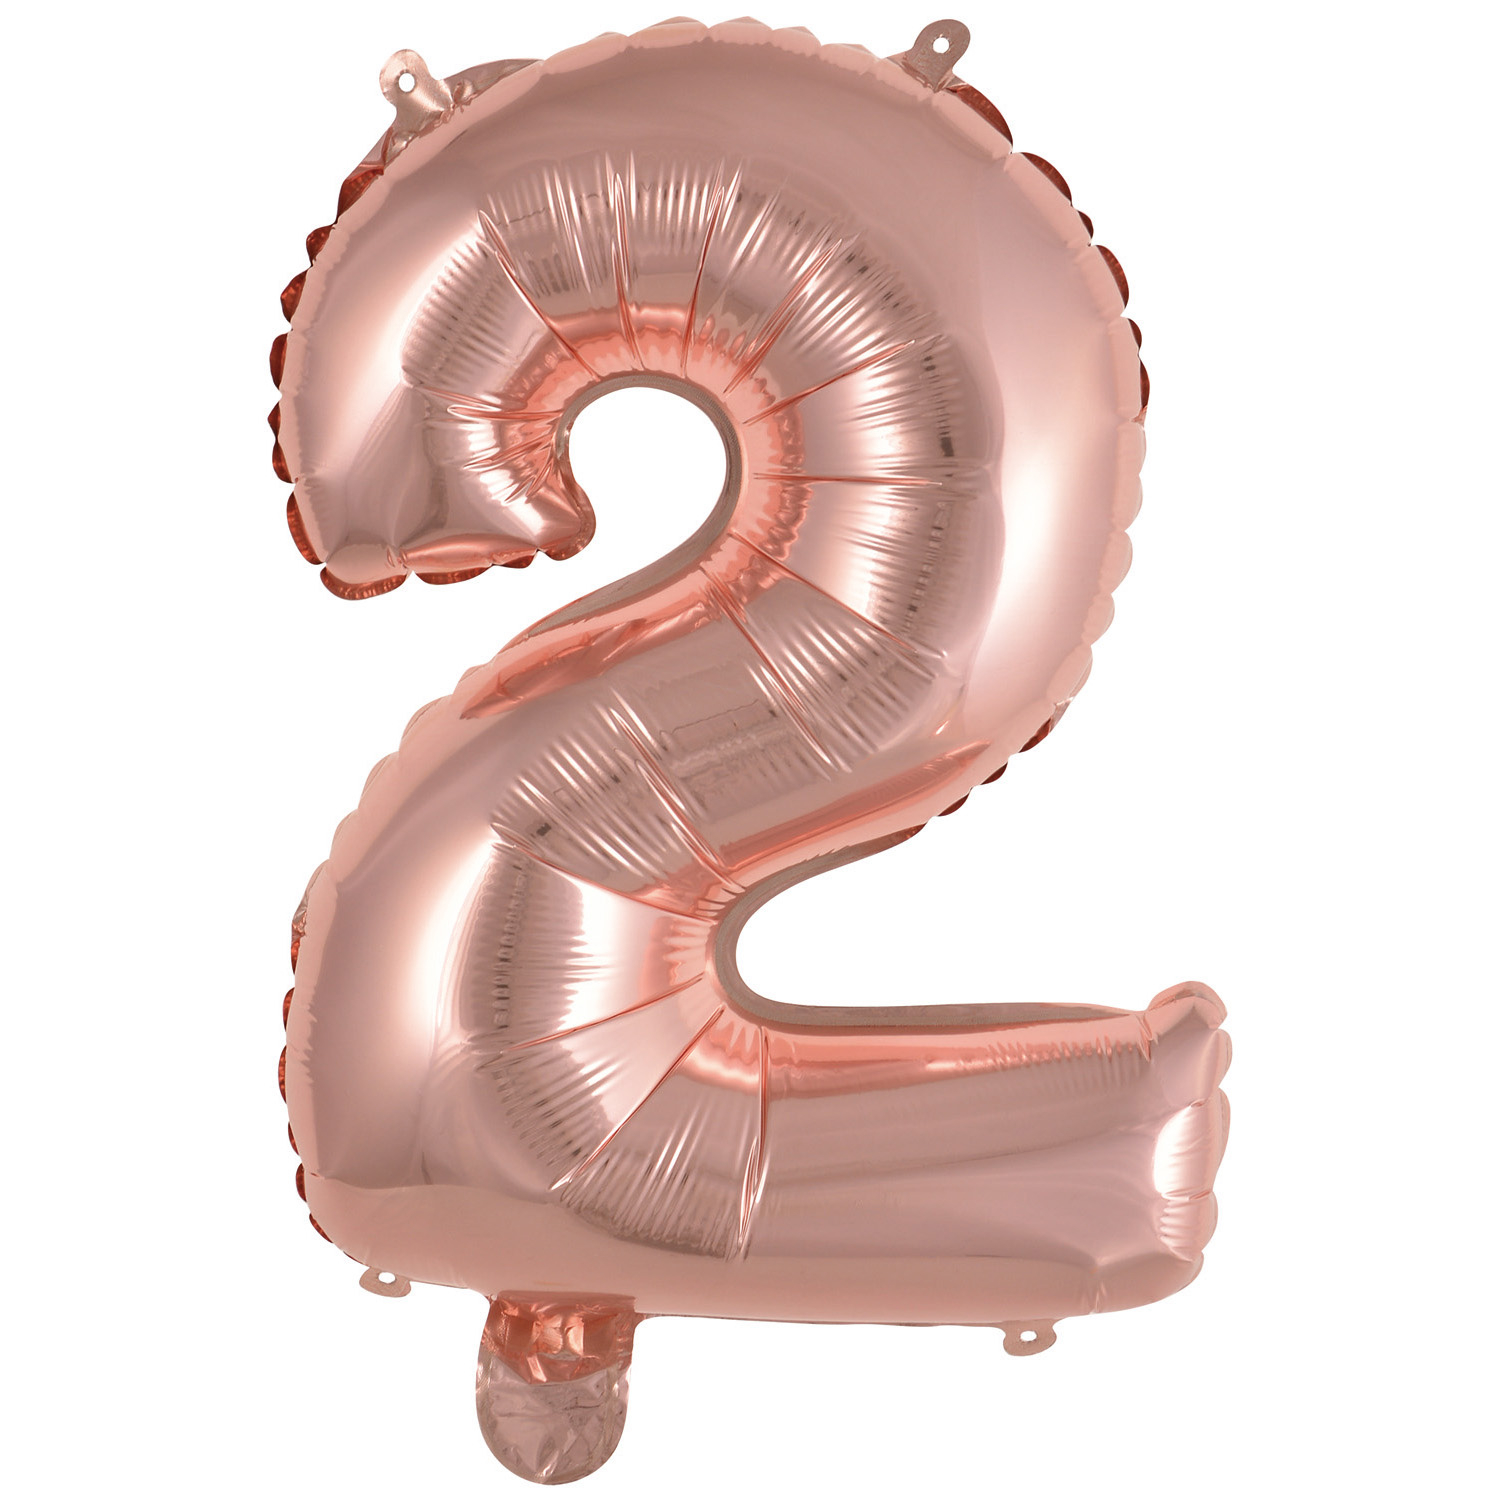 Verplicht ritme Balling Mini folie ballon cijfer 2 (35cm) - rosé goud - Feesthuis